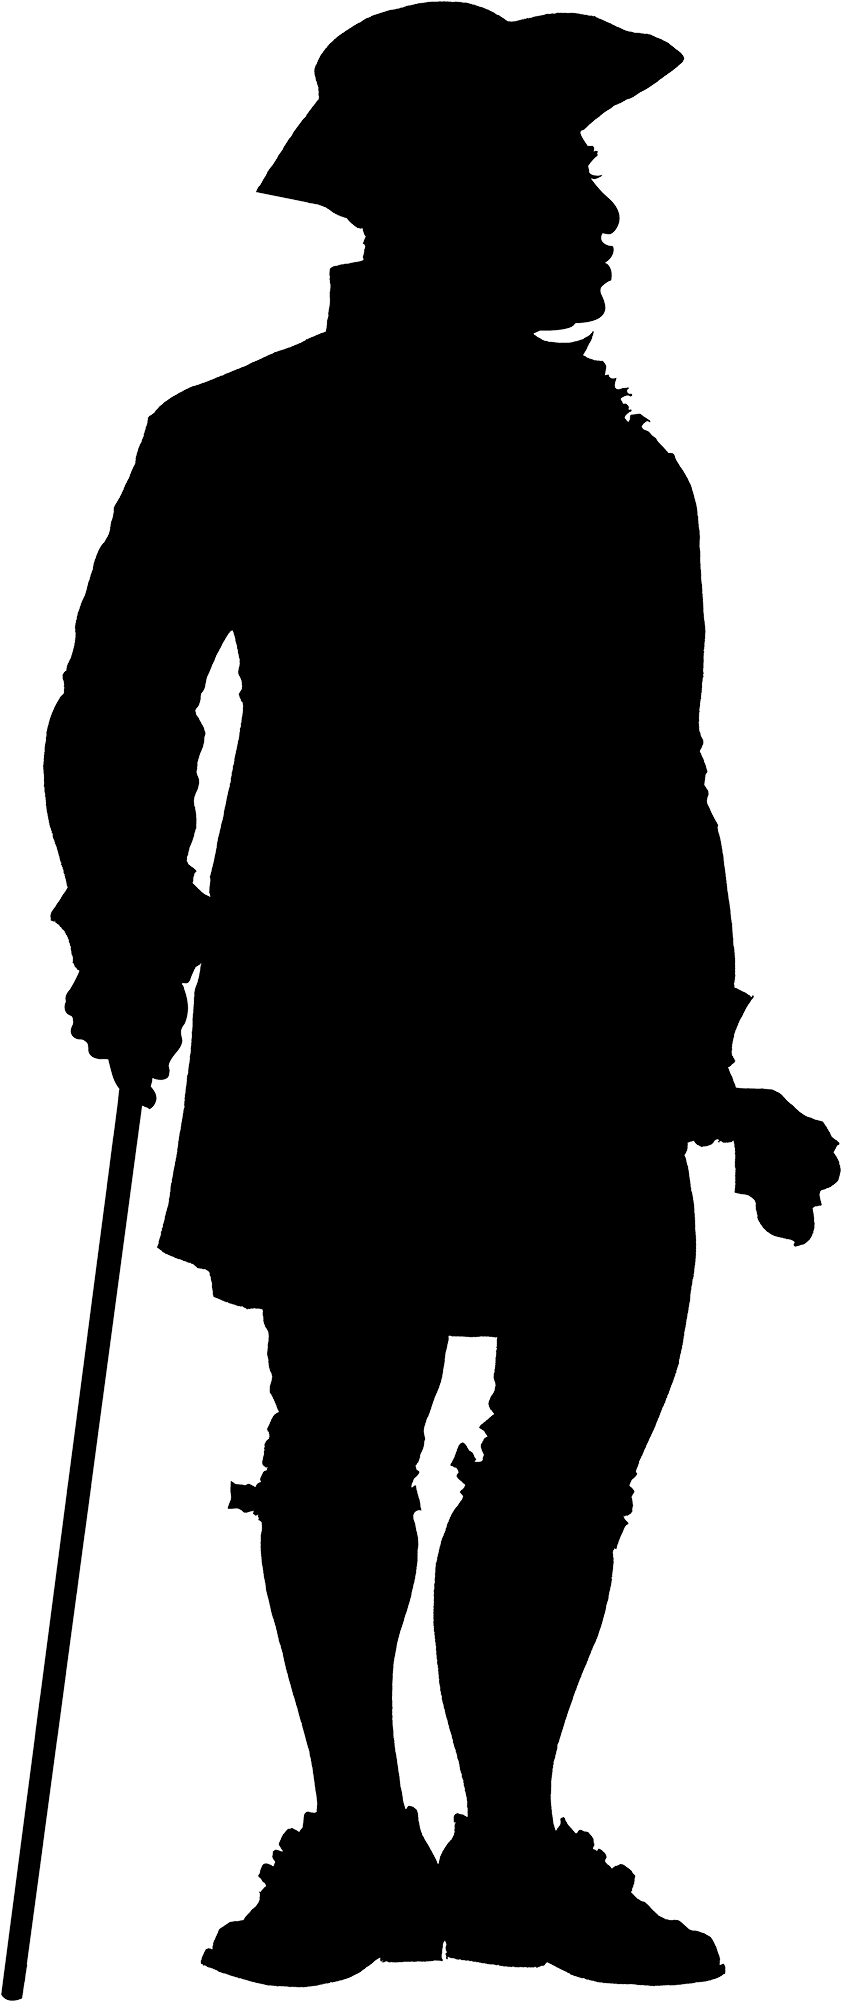 Hercules - American Revolution Soldier Silhouette (1330x2000)